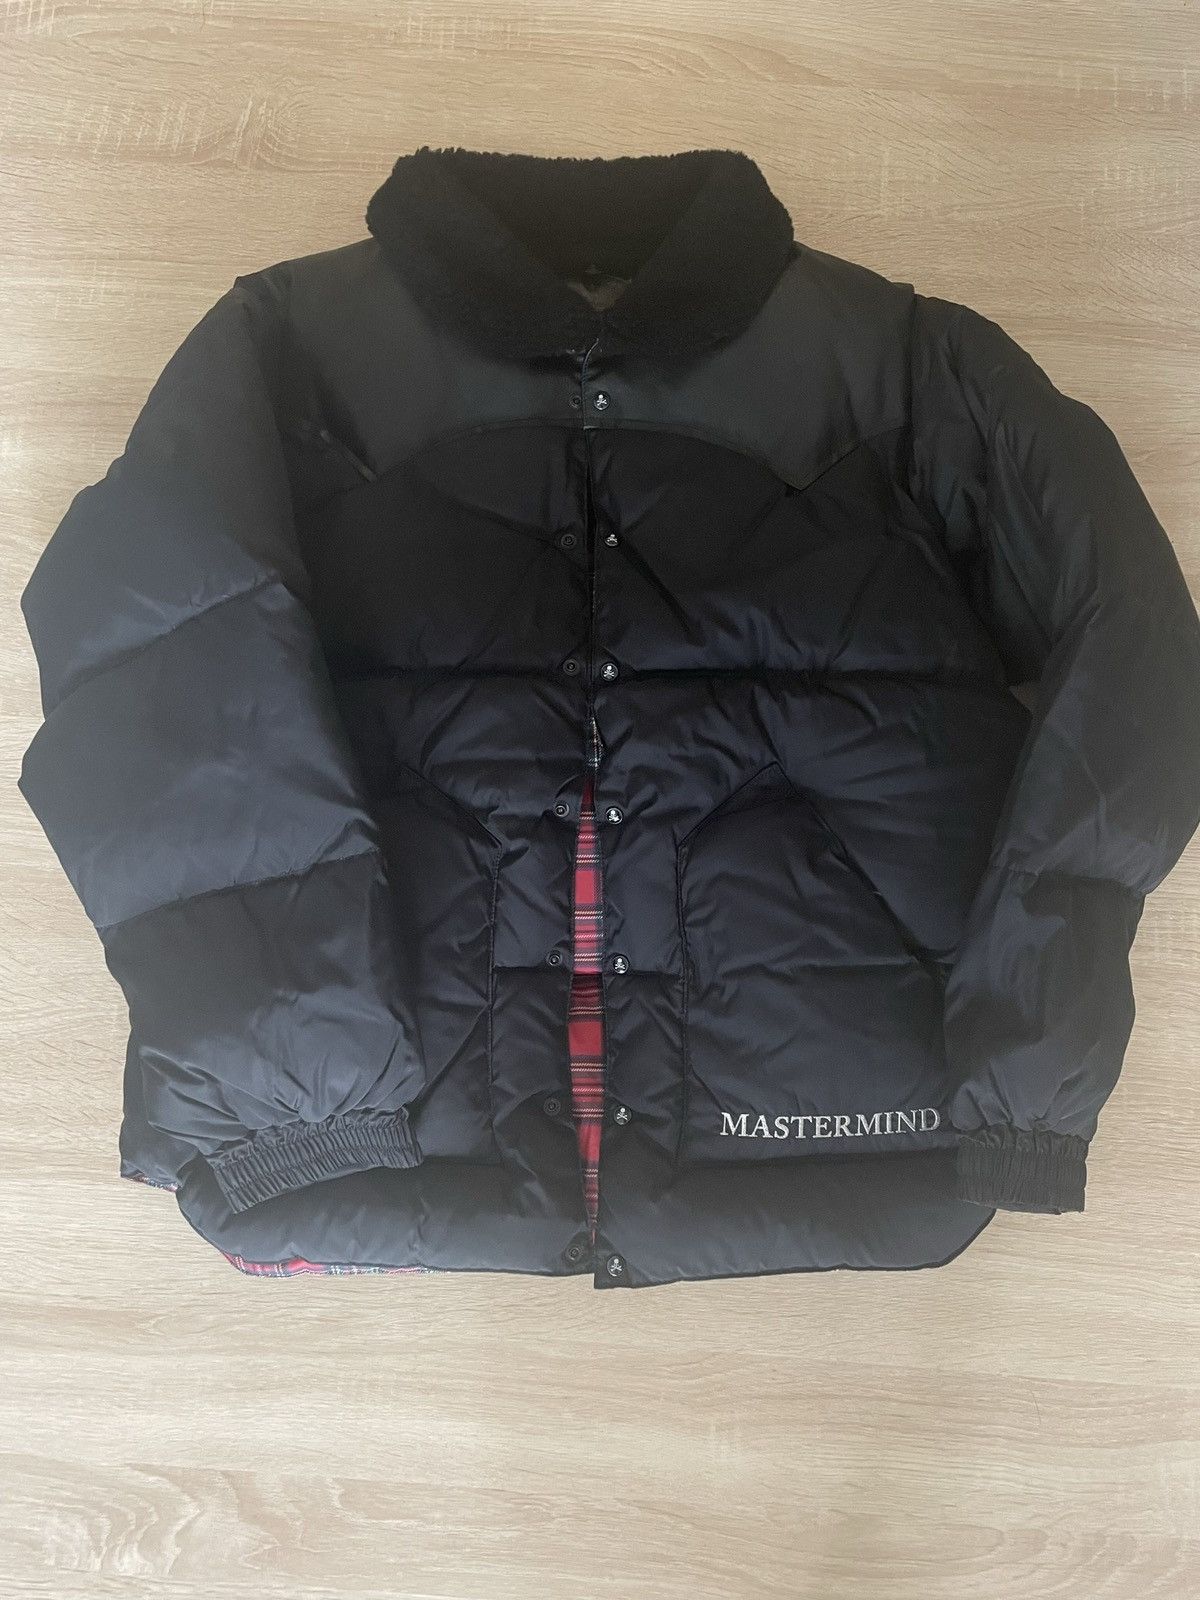 Mastermind Japan Mmj x Rocky Mountain down jacket | Grailed